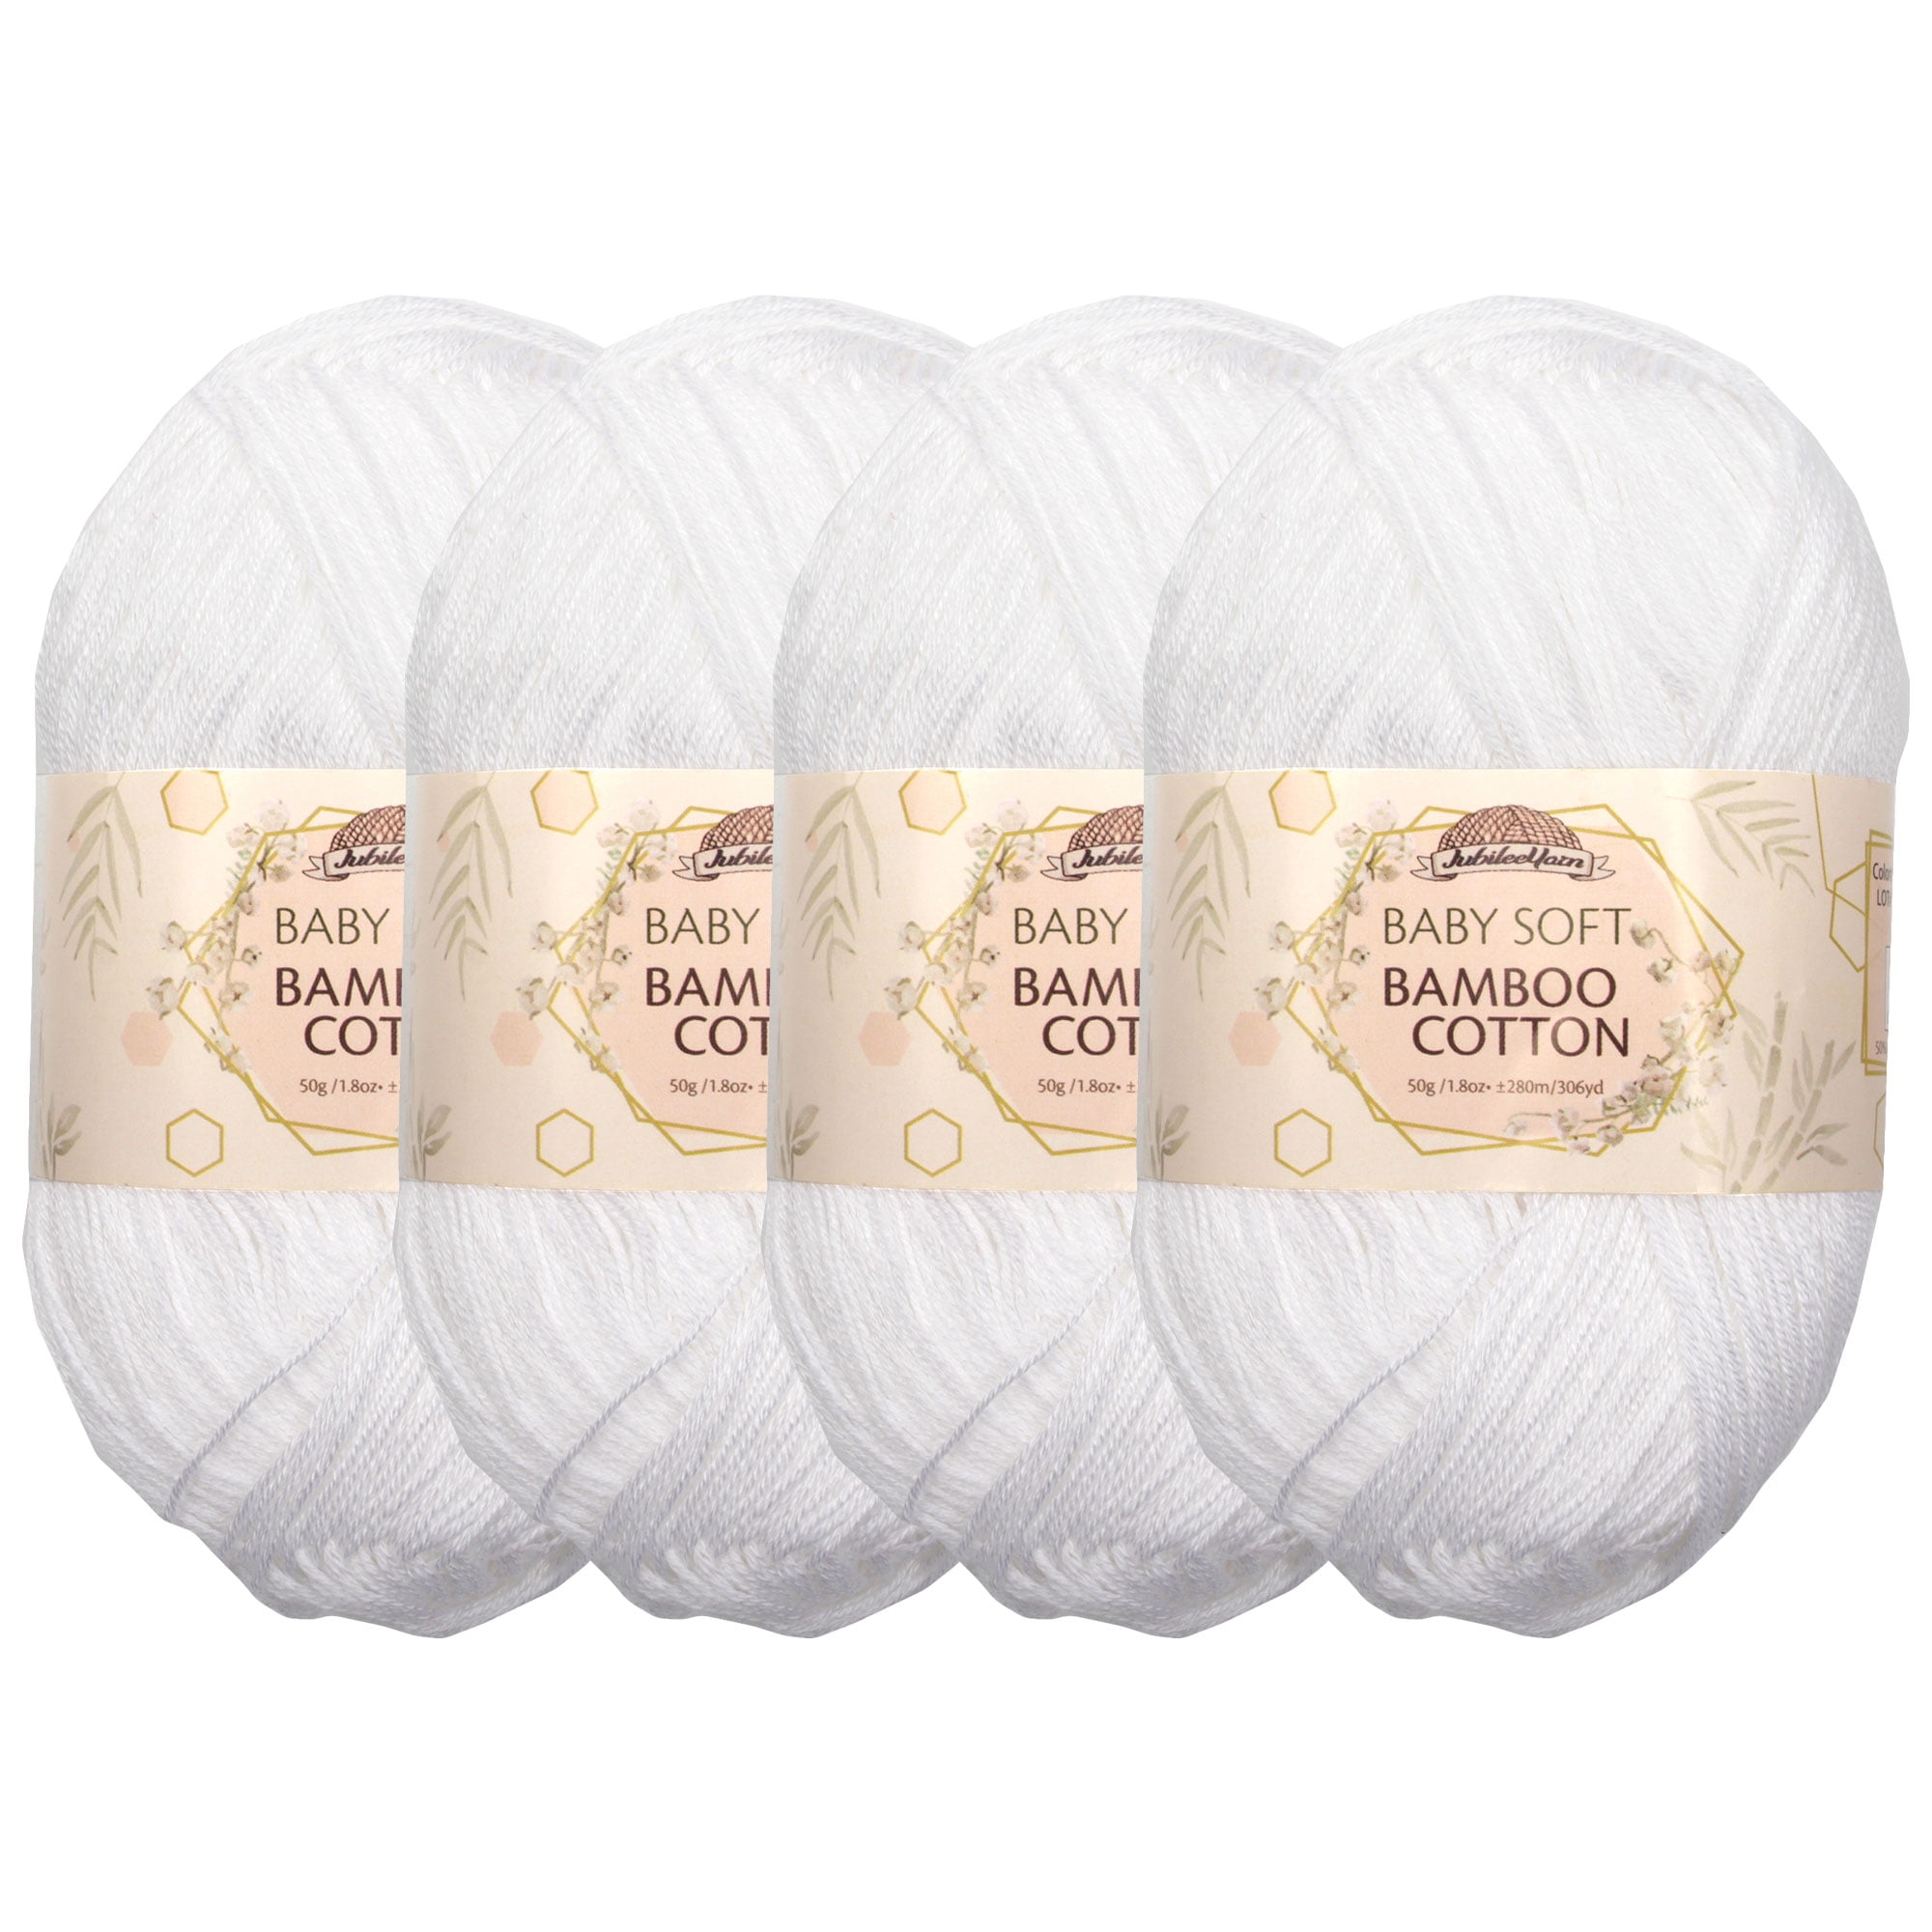 JubileeYarn Bamboo Cotton Sport Yarn - 50g/Skein - Shades of Neutral Tones - 4 Skeins